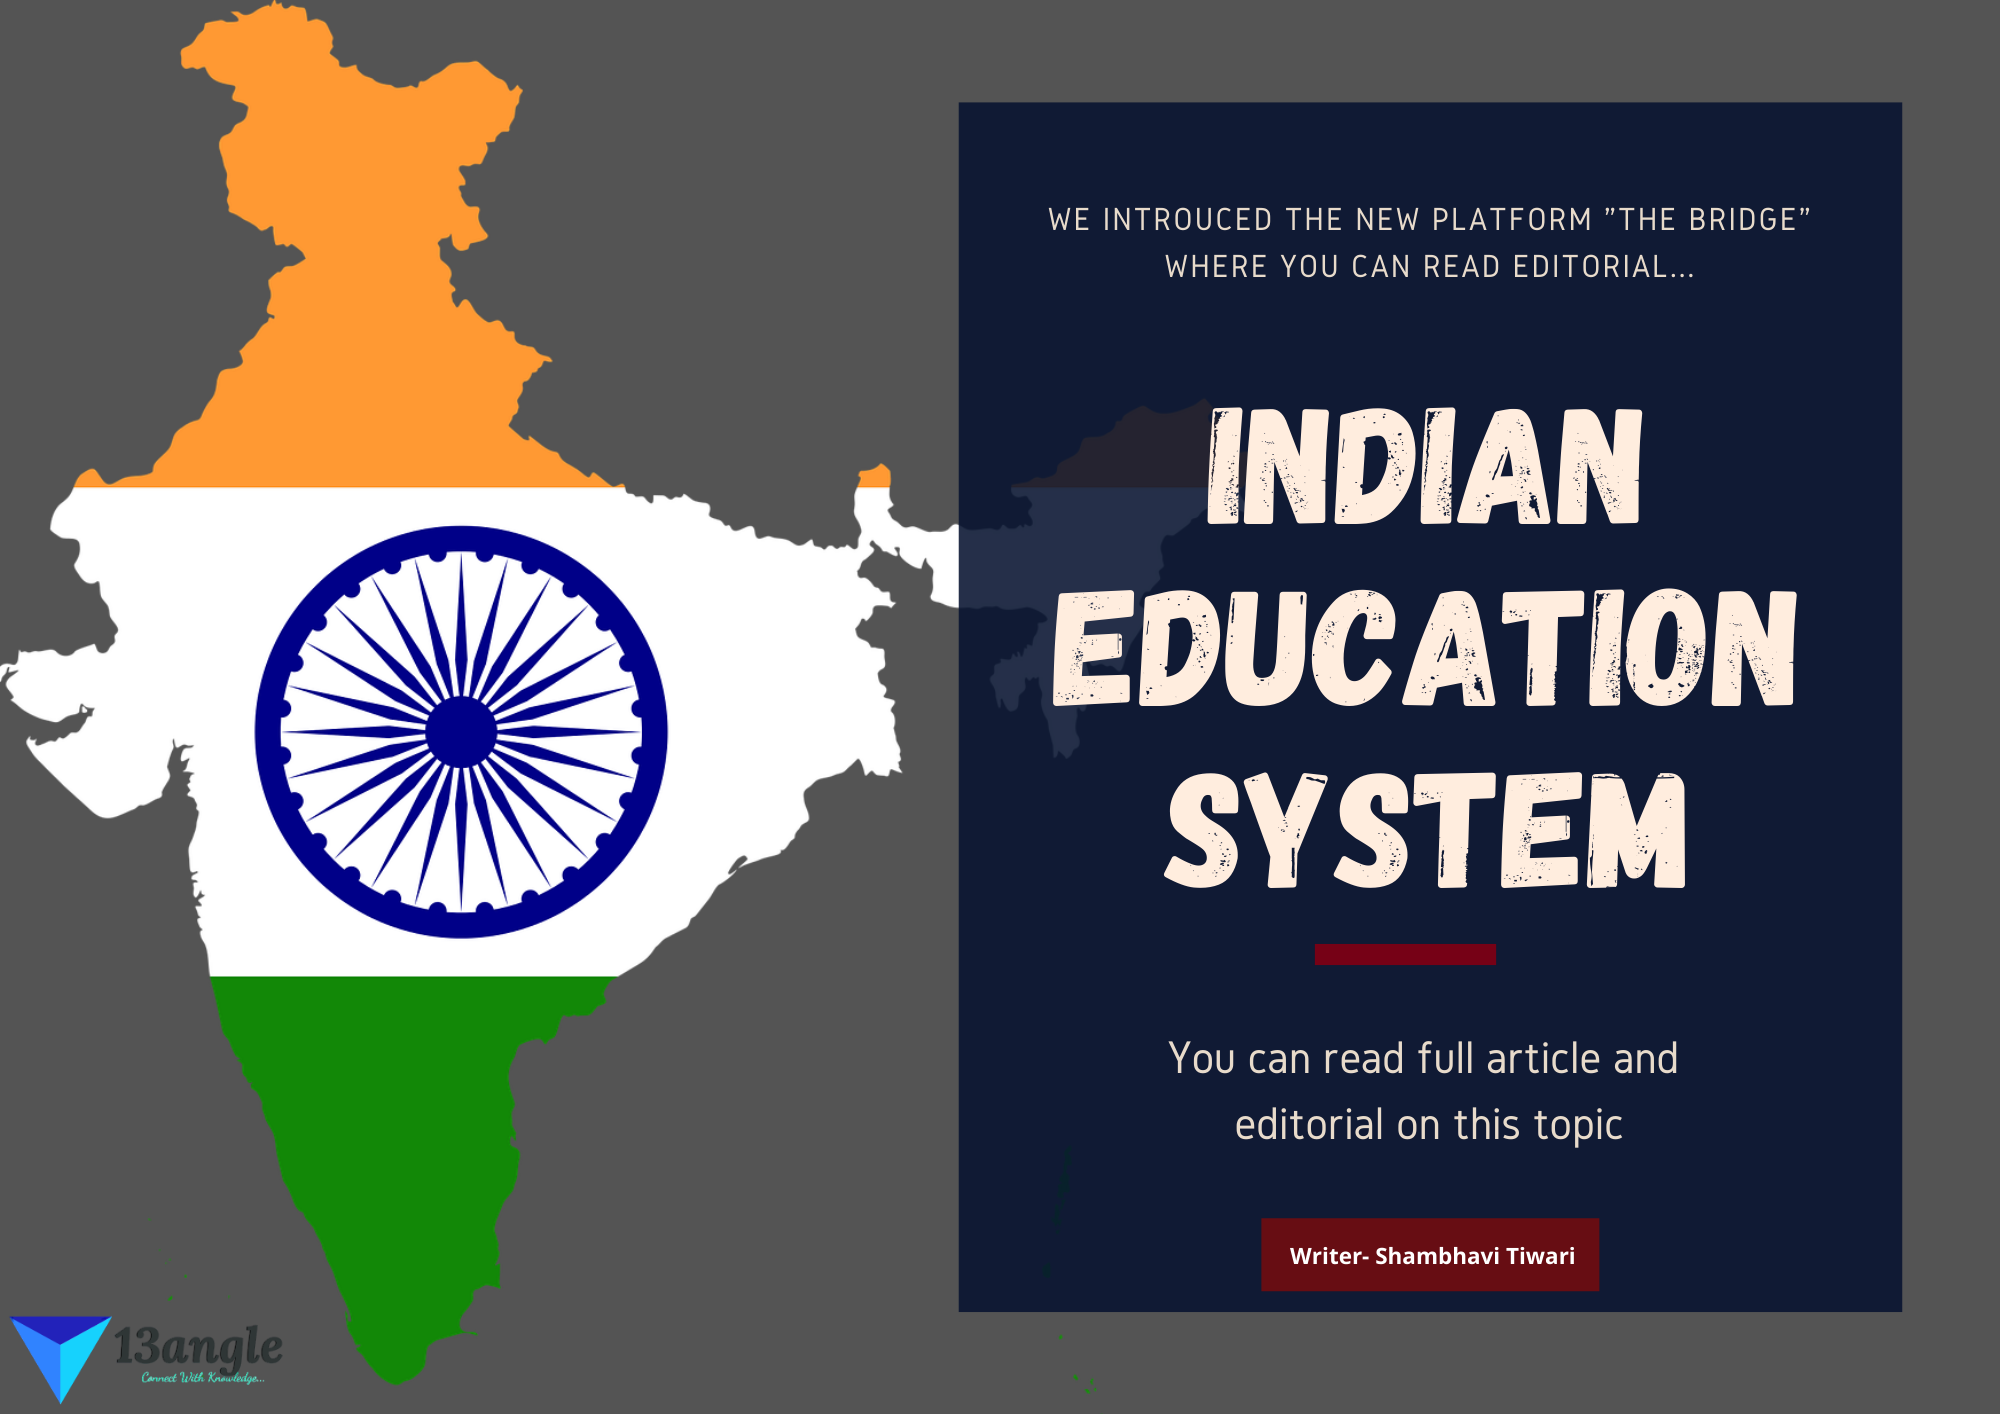 Indian Eduvation System- 13angle.com